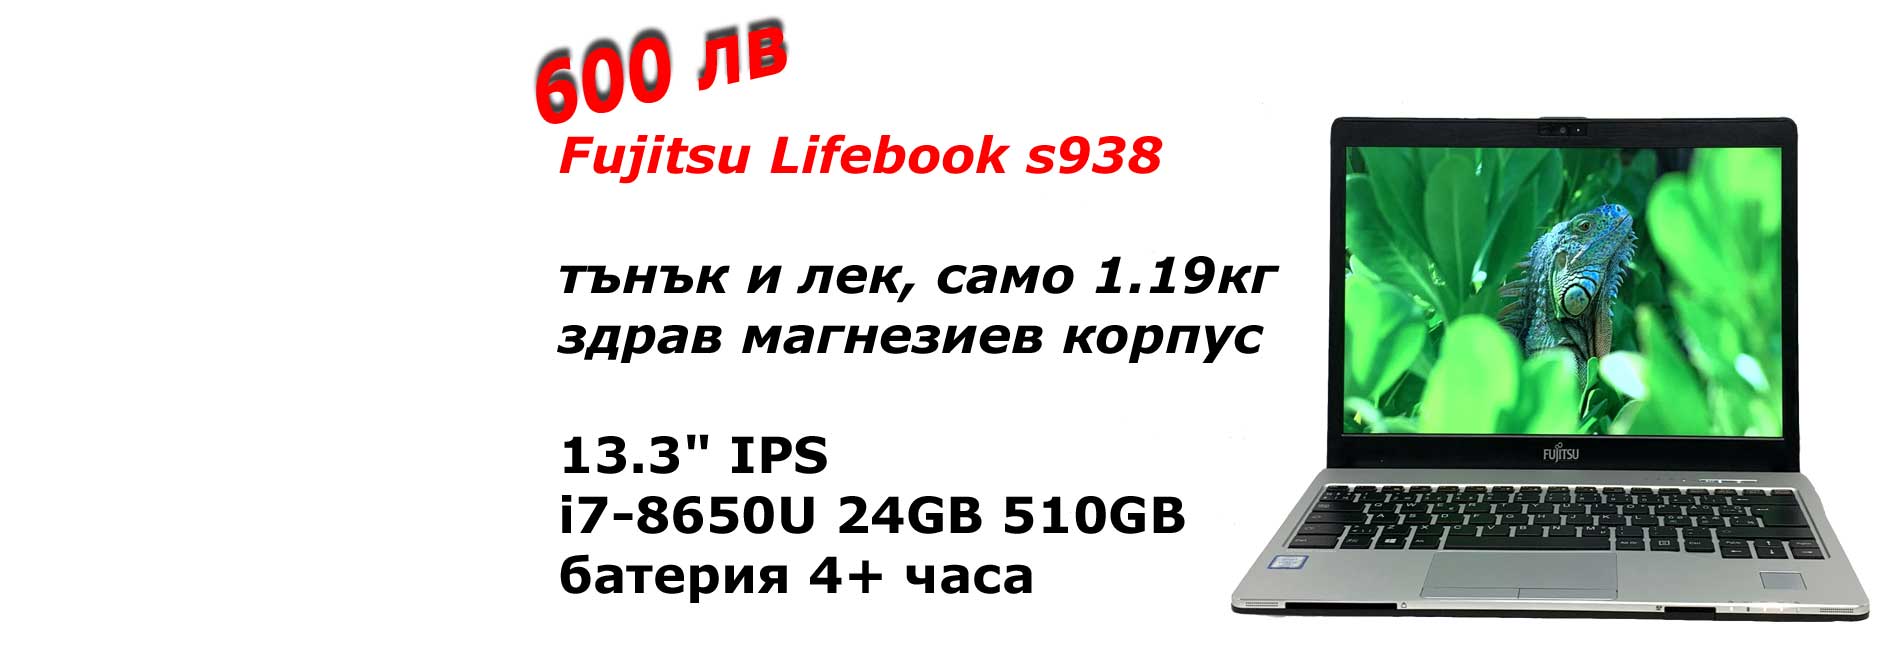 Fujitsu Lifebook s938